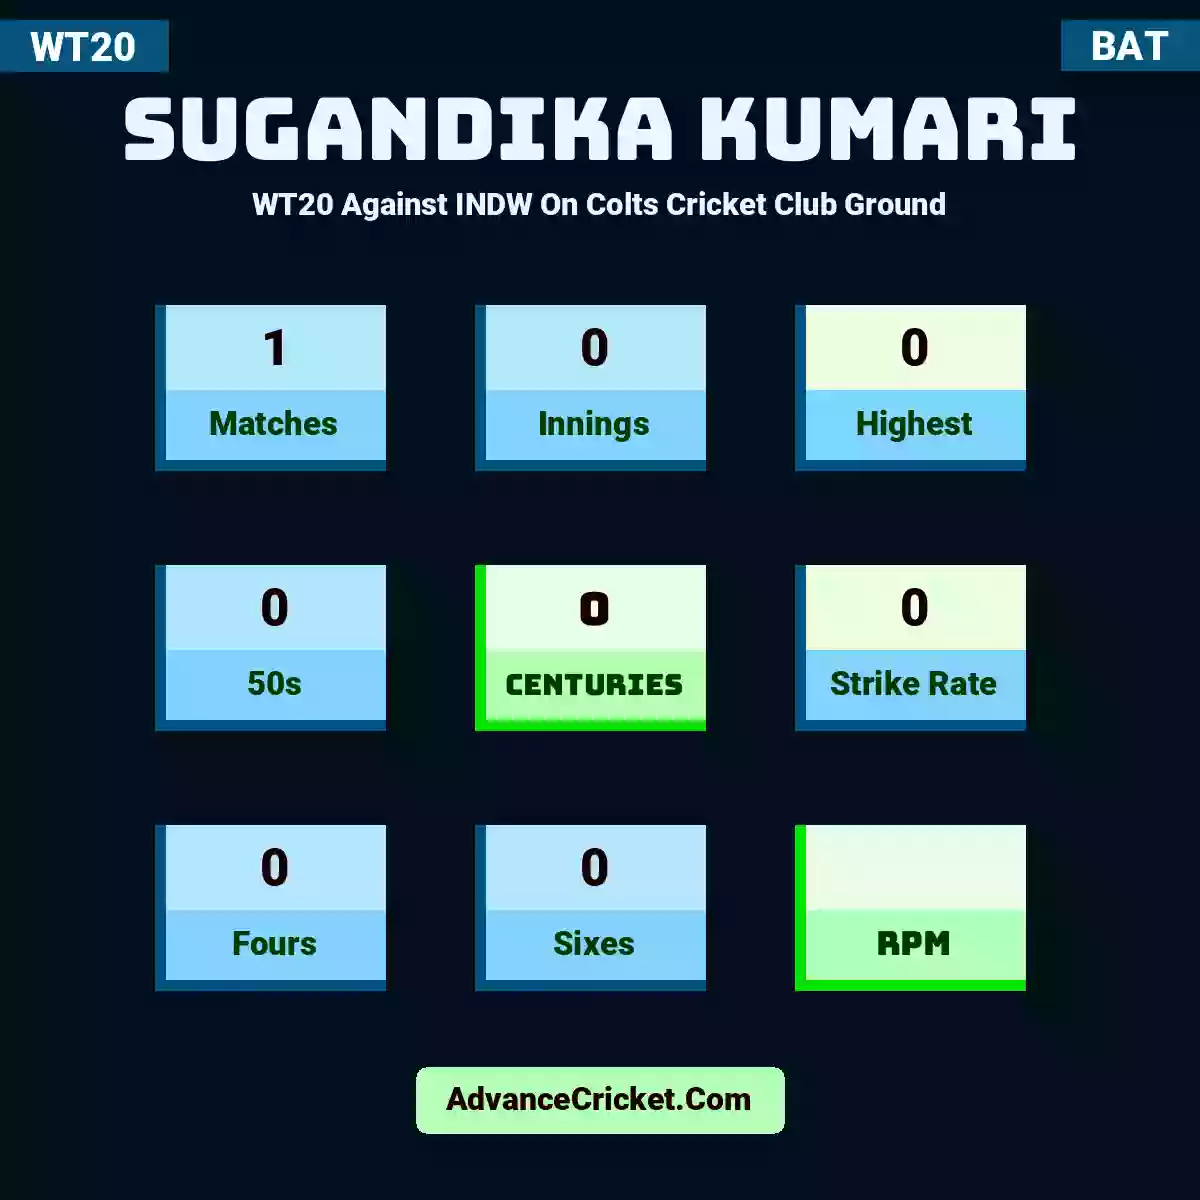 Sugandika Kumari WT20  Against INDW On Colts Cricket Club Ground, Sugandika Kumari played 1 matches, scored 0 runs as highest, 0 half-centuries, and 0 centuries, with a strike rate of 0. S.Kumari hit 0 fours and 0 sixes.